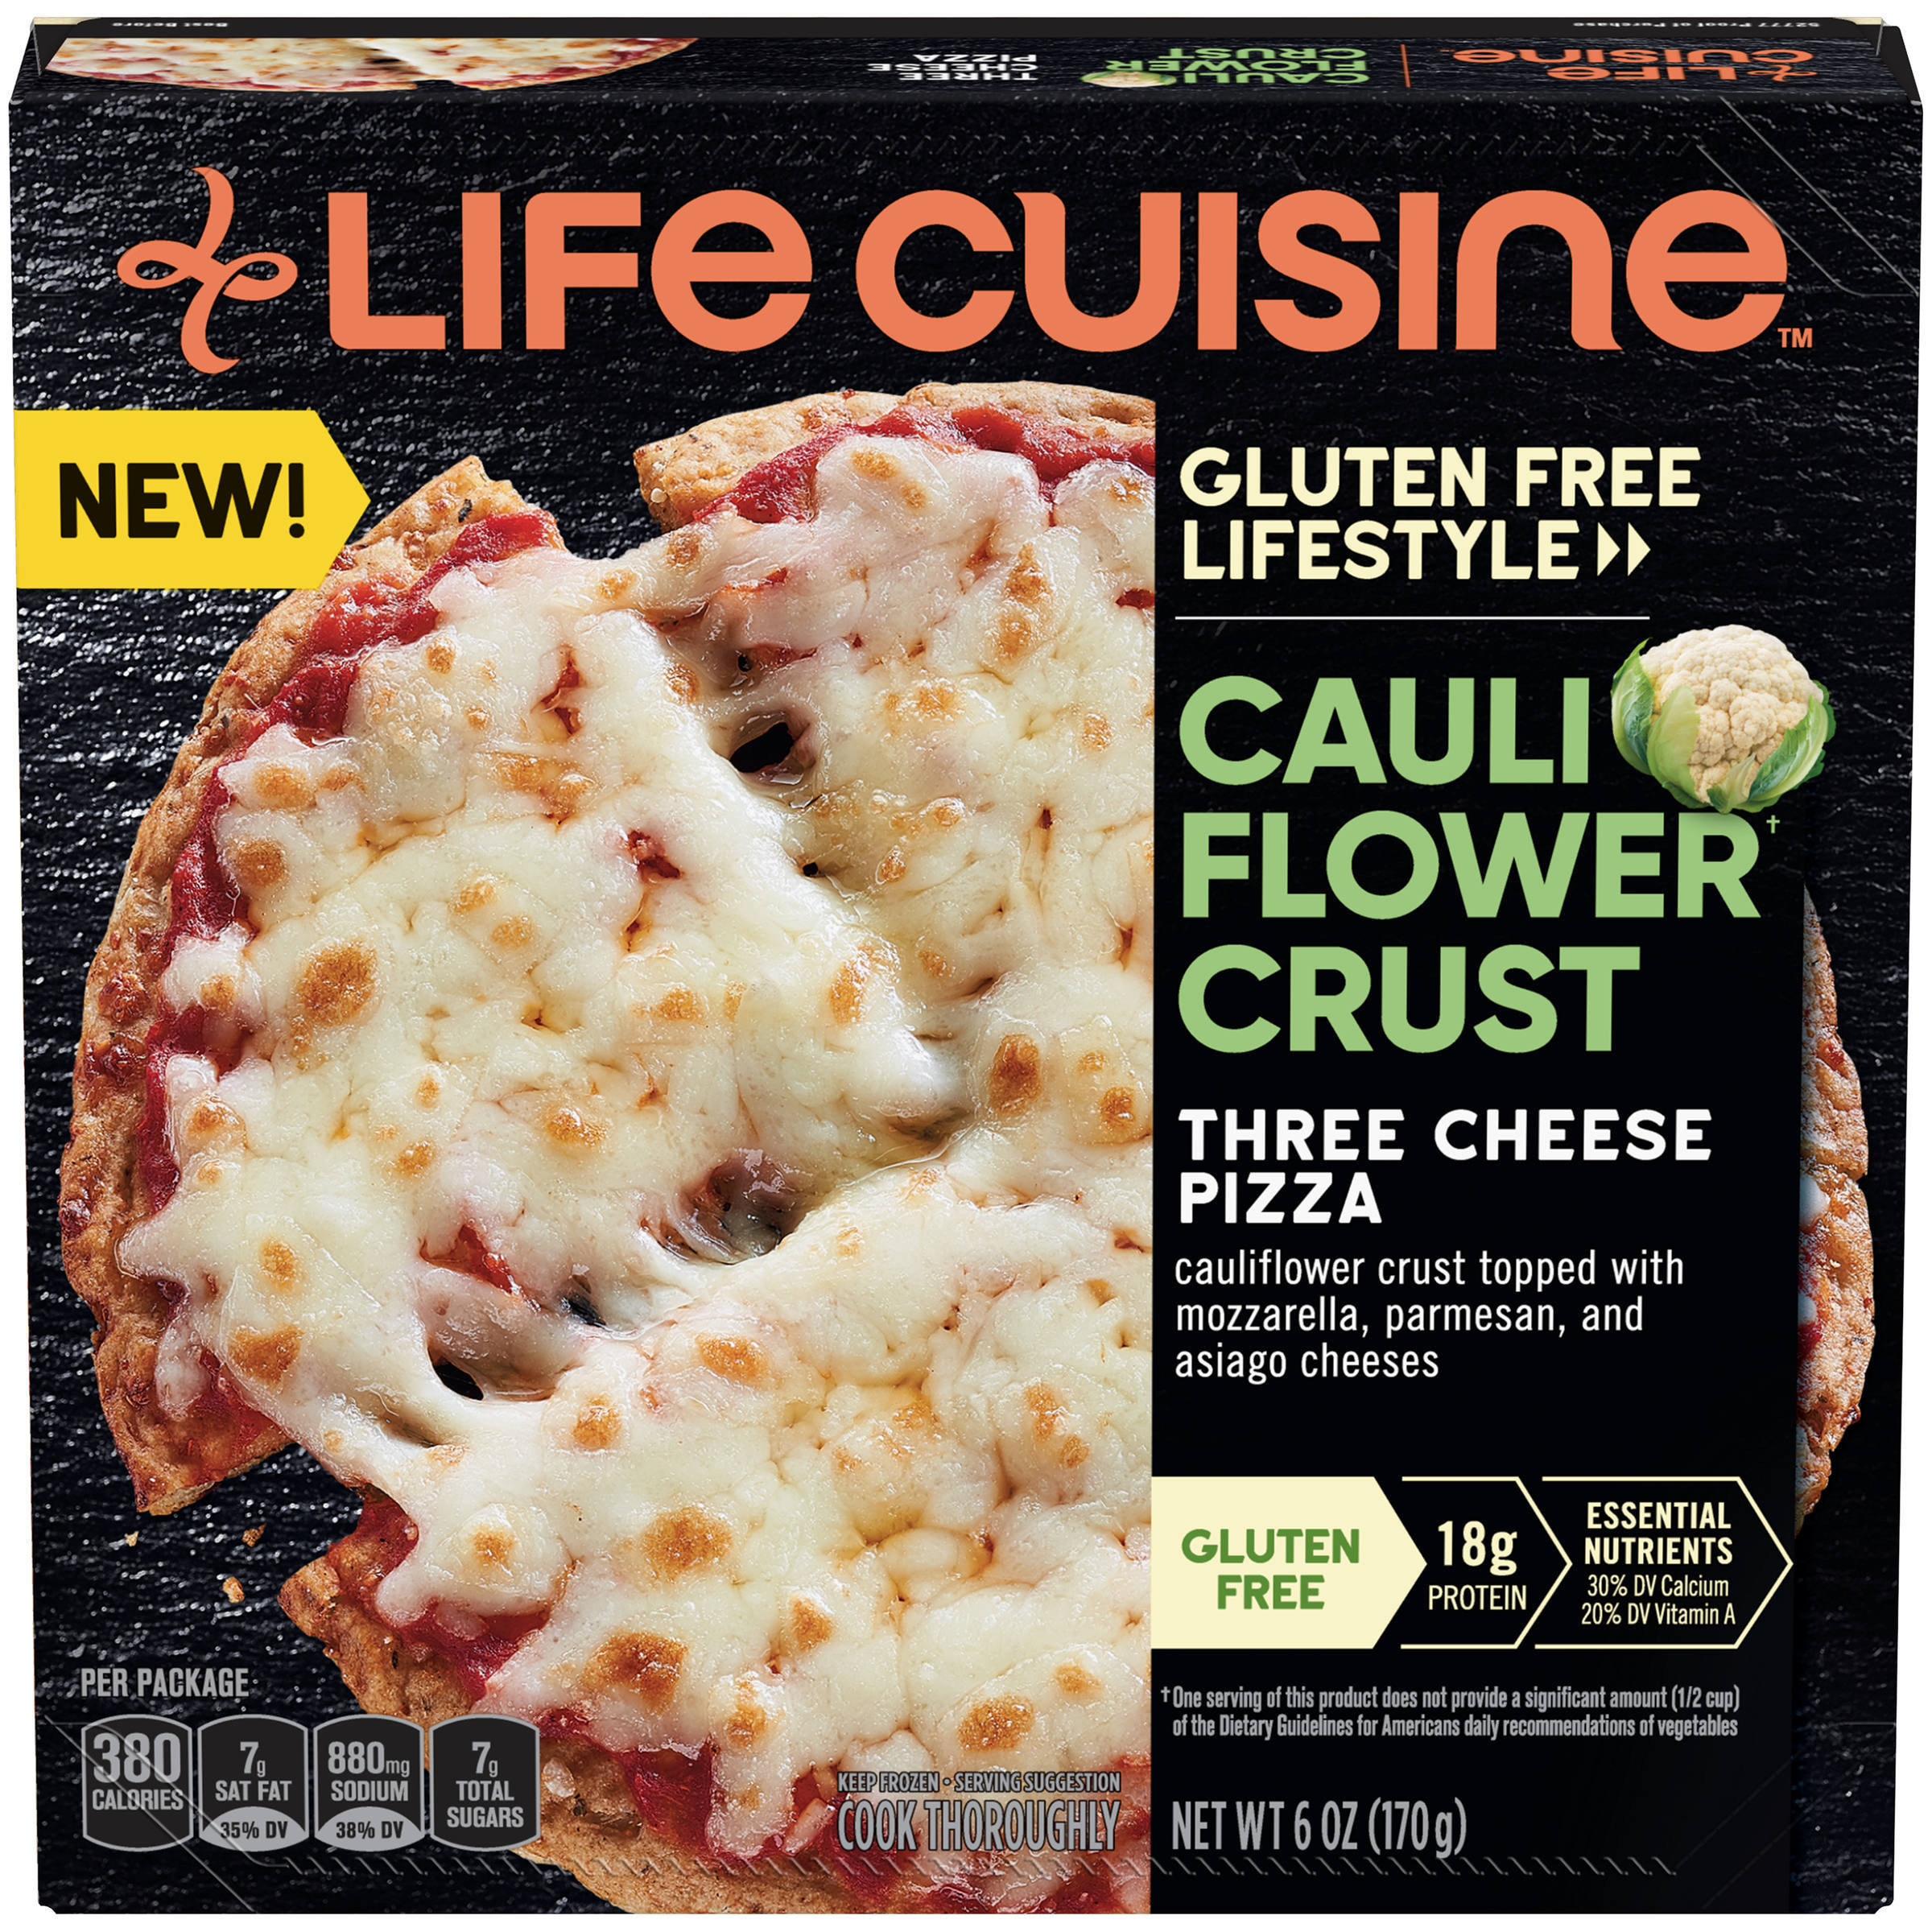 Cauliflower Pizza Crust Walmart
 LIFE CUISINE GLUTEN FREE LIFESTYLE Cauliflower Crust Three